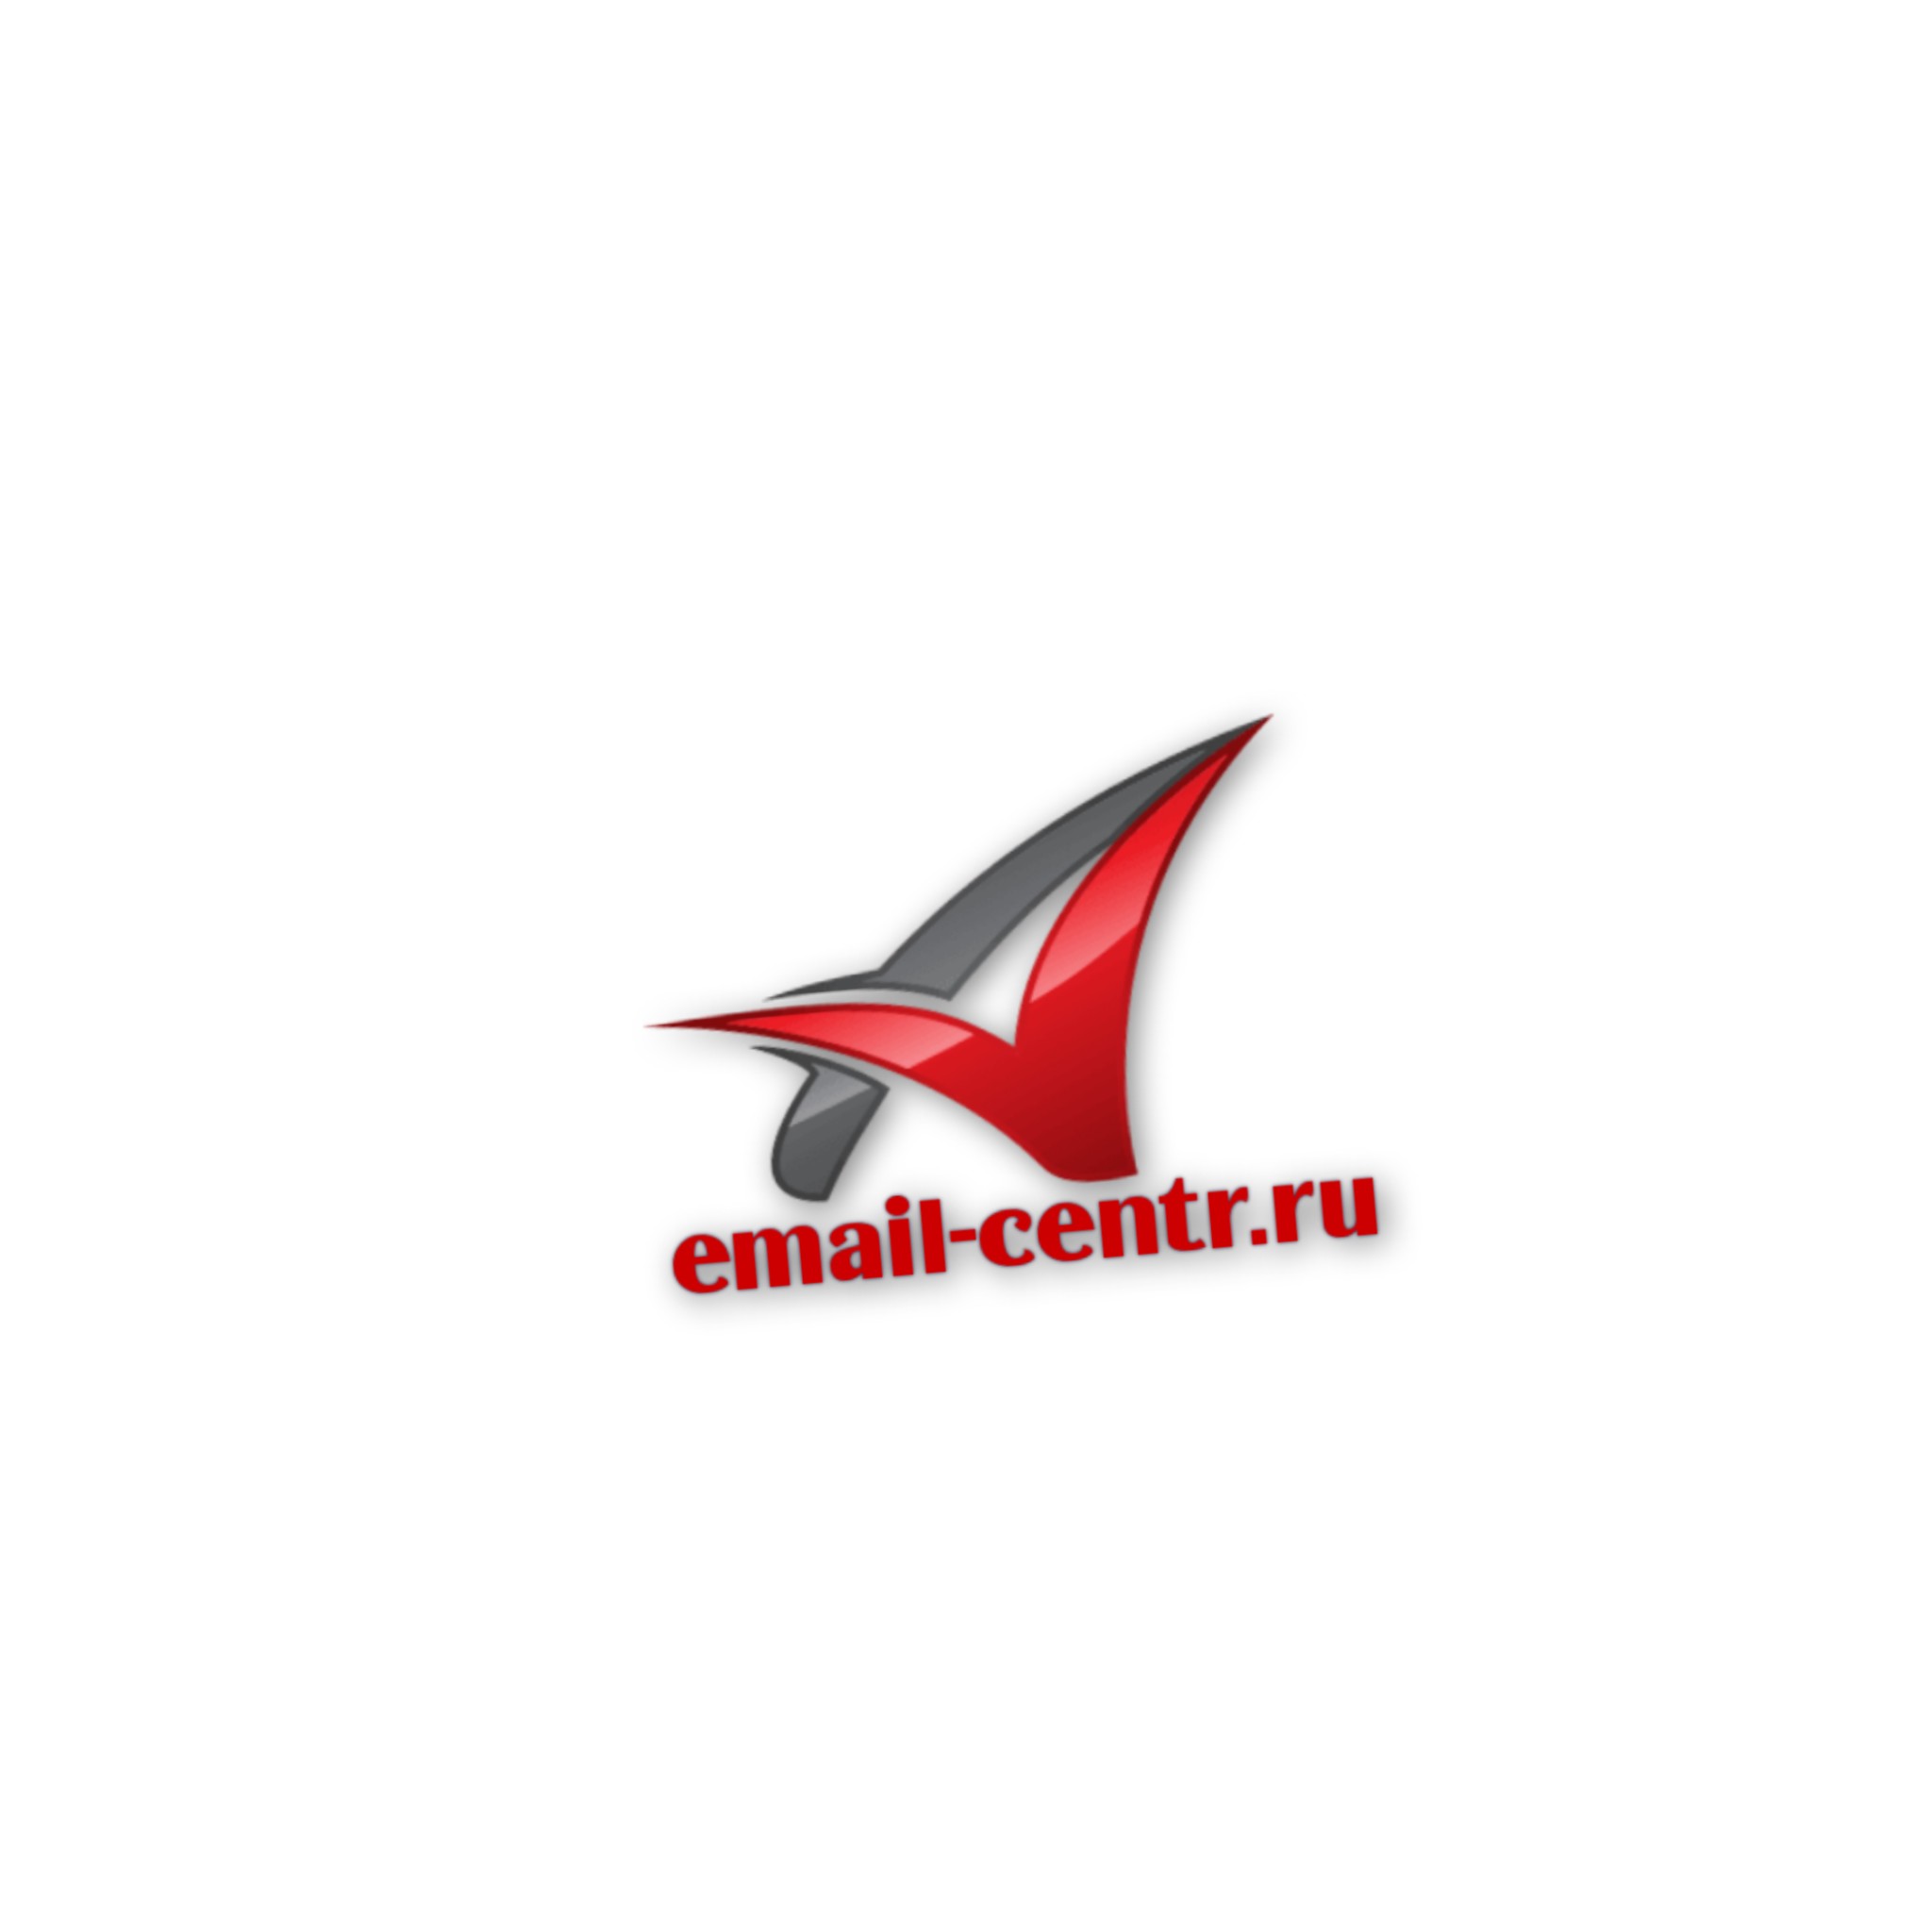 Логотип компании Email-centr